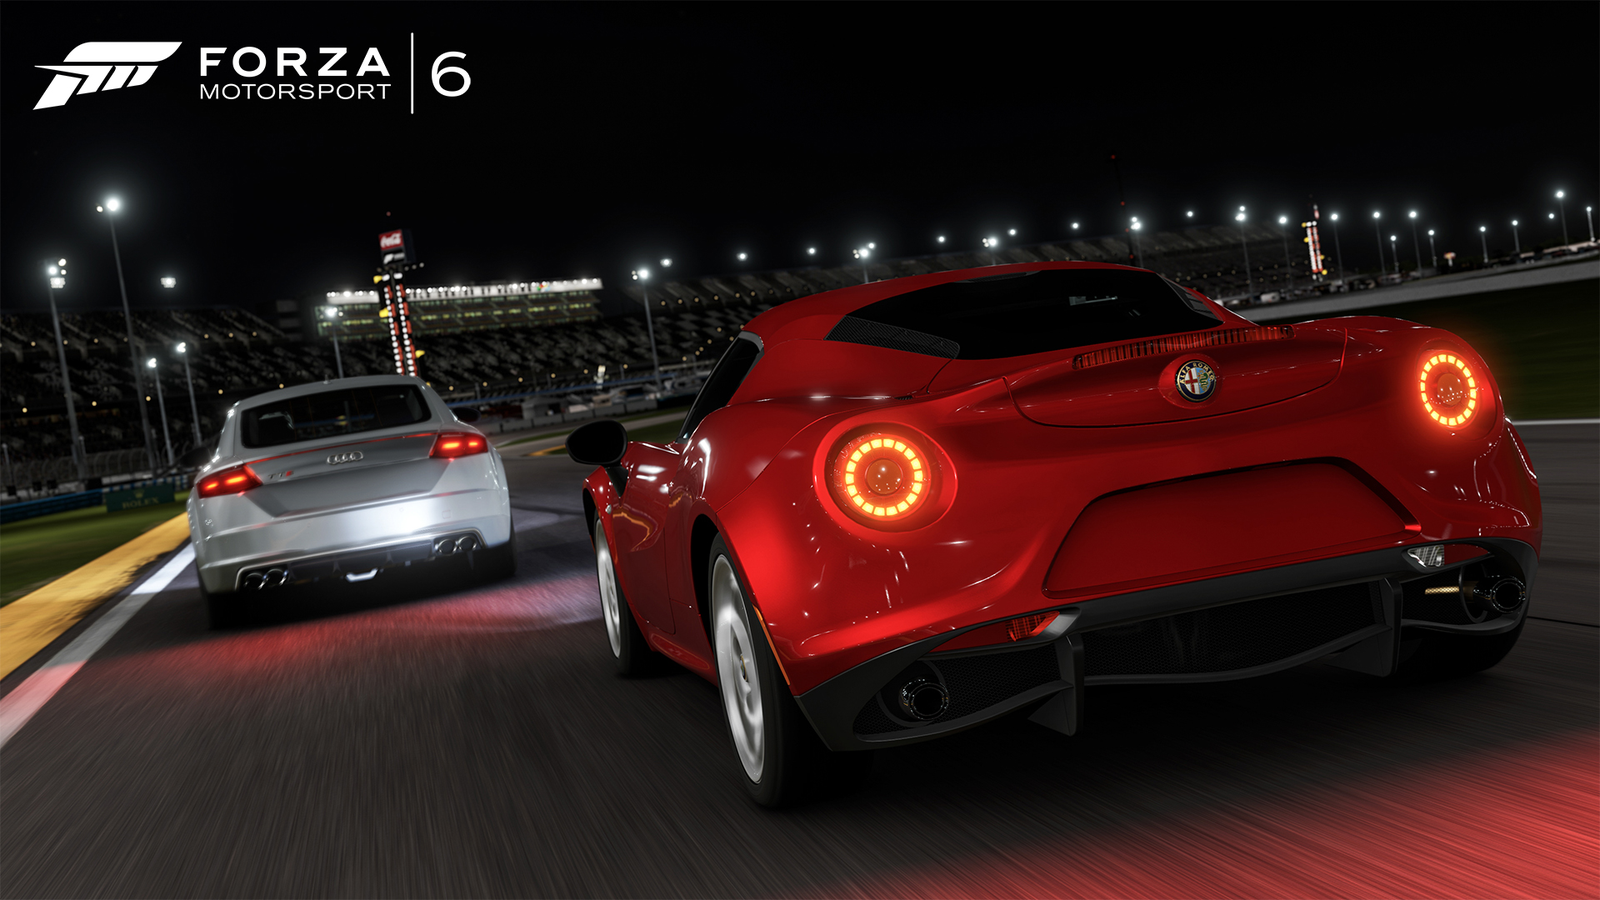 Forza Motorsport 6: Apex - Windows 10 - Announcement Trailer (4K) 